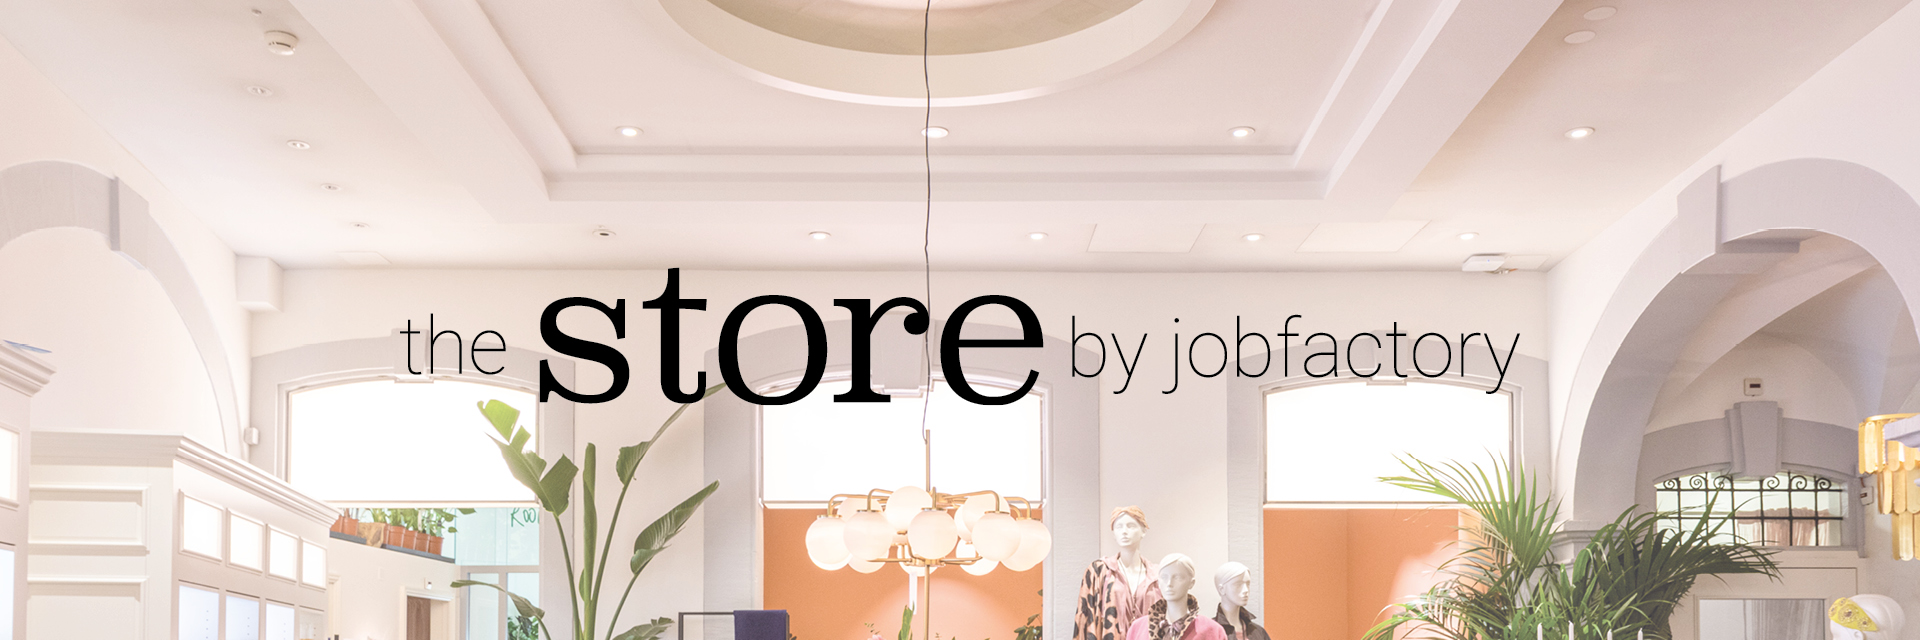 Jobfactory Geschäftsfeld Store